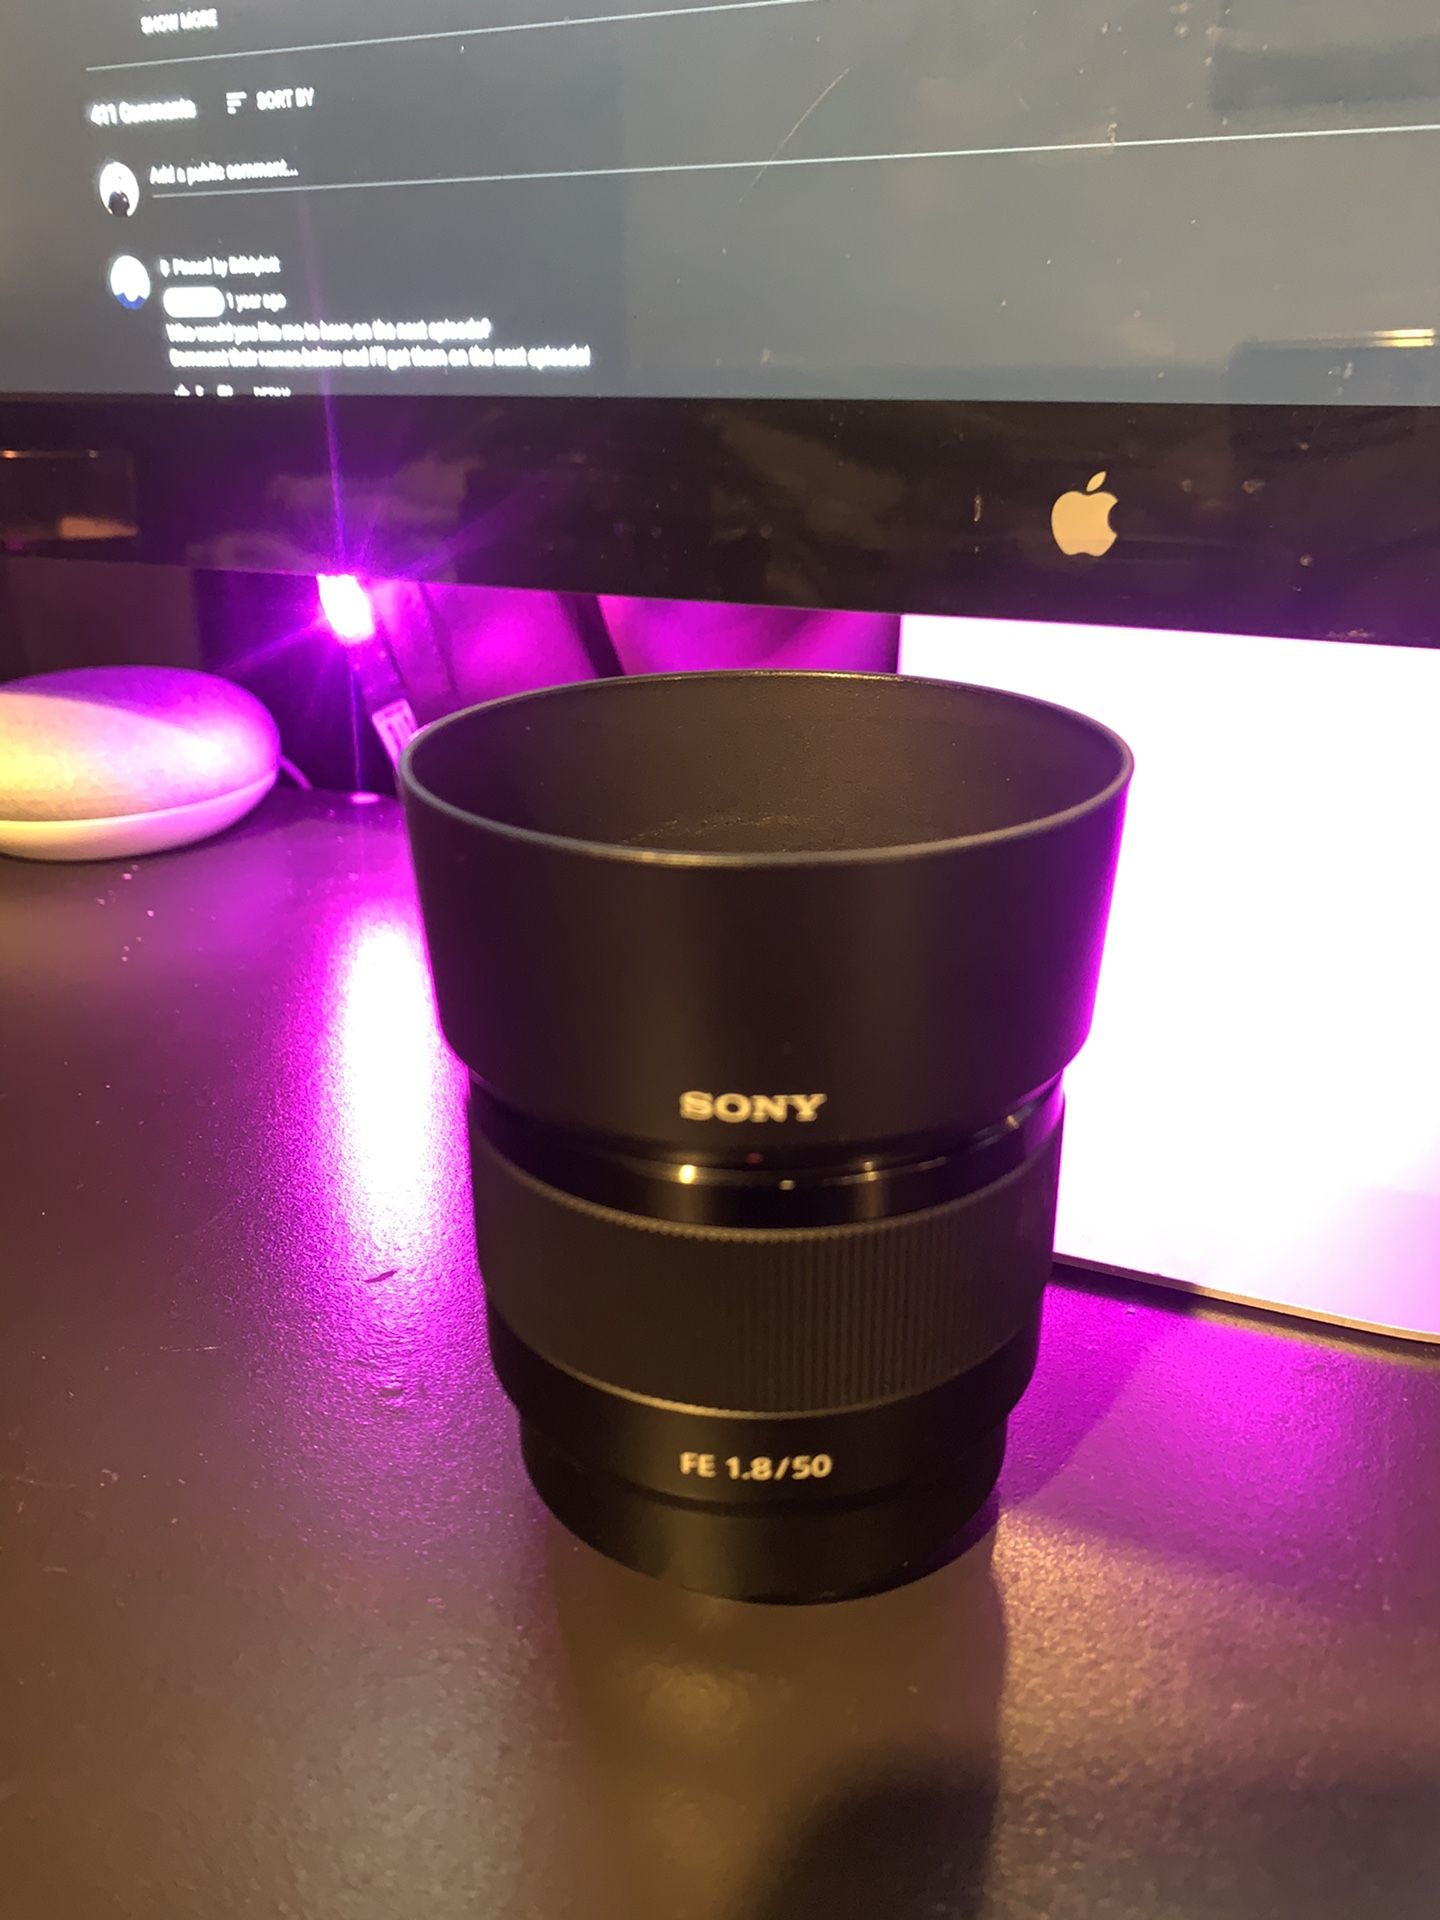 50mm 1.8 lens for sale $150 fe Mount for Sony alpha cameras